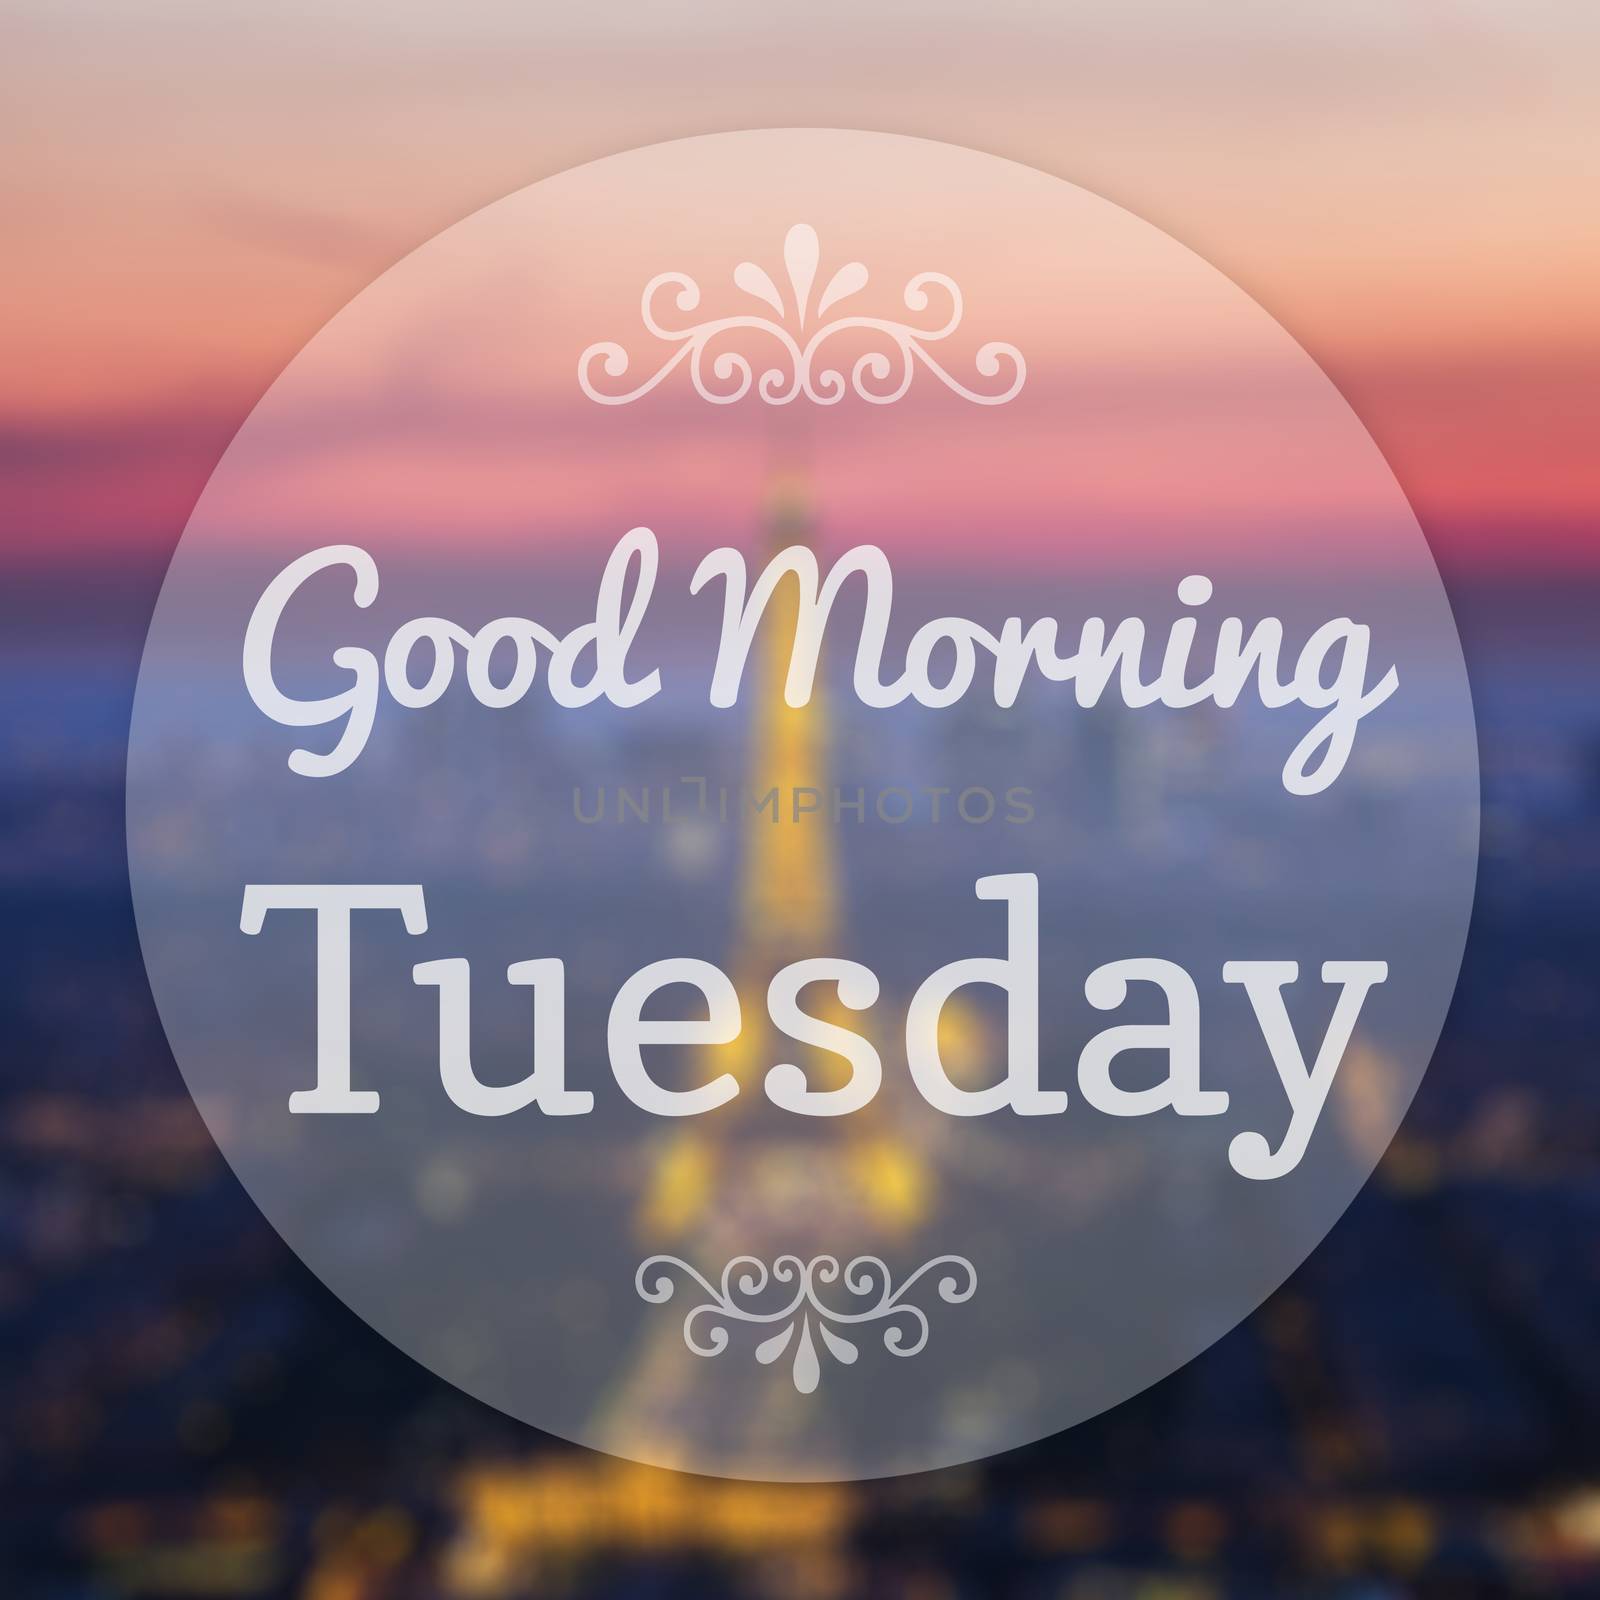 Good Morning Tuesday on Eiffle Paris blur background